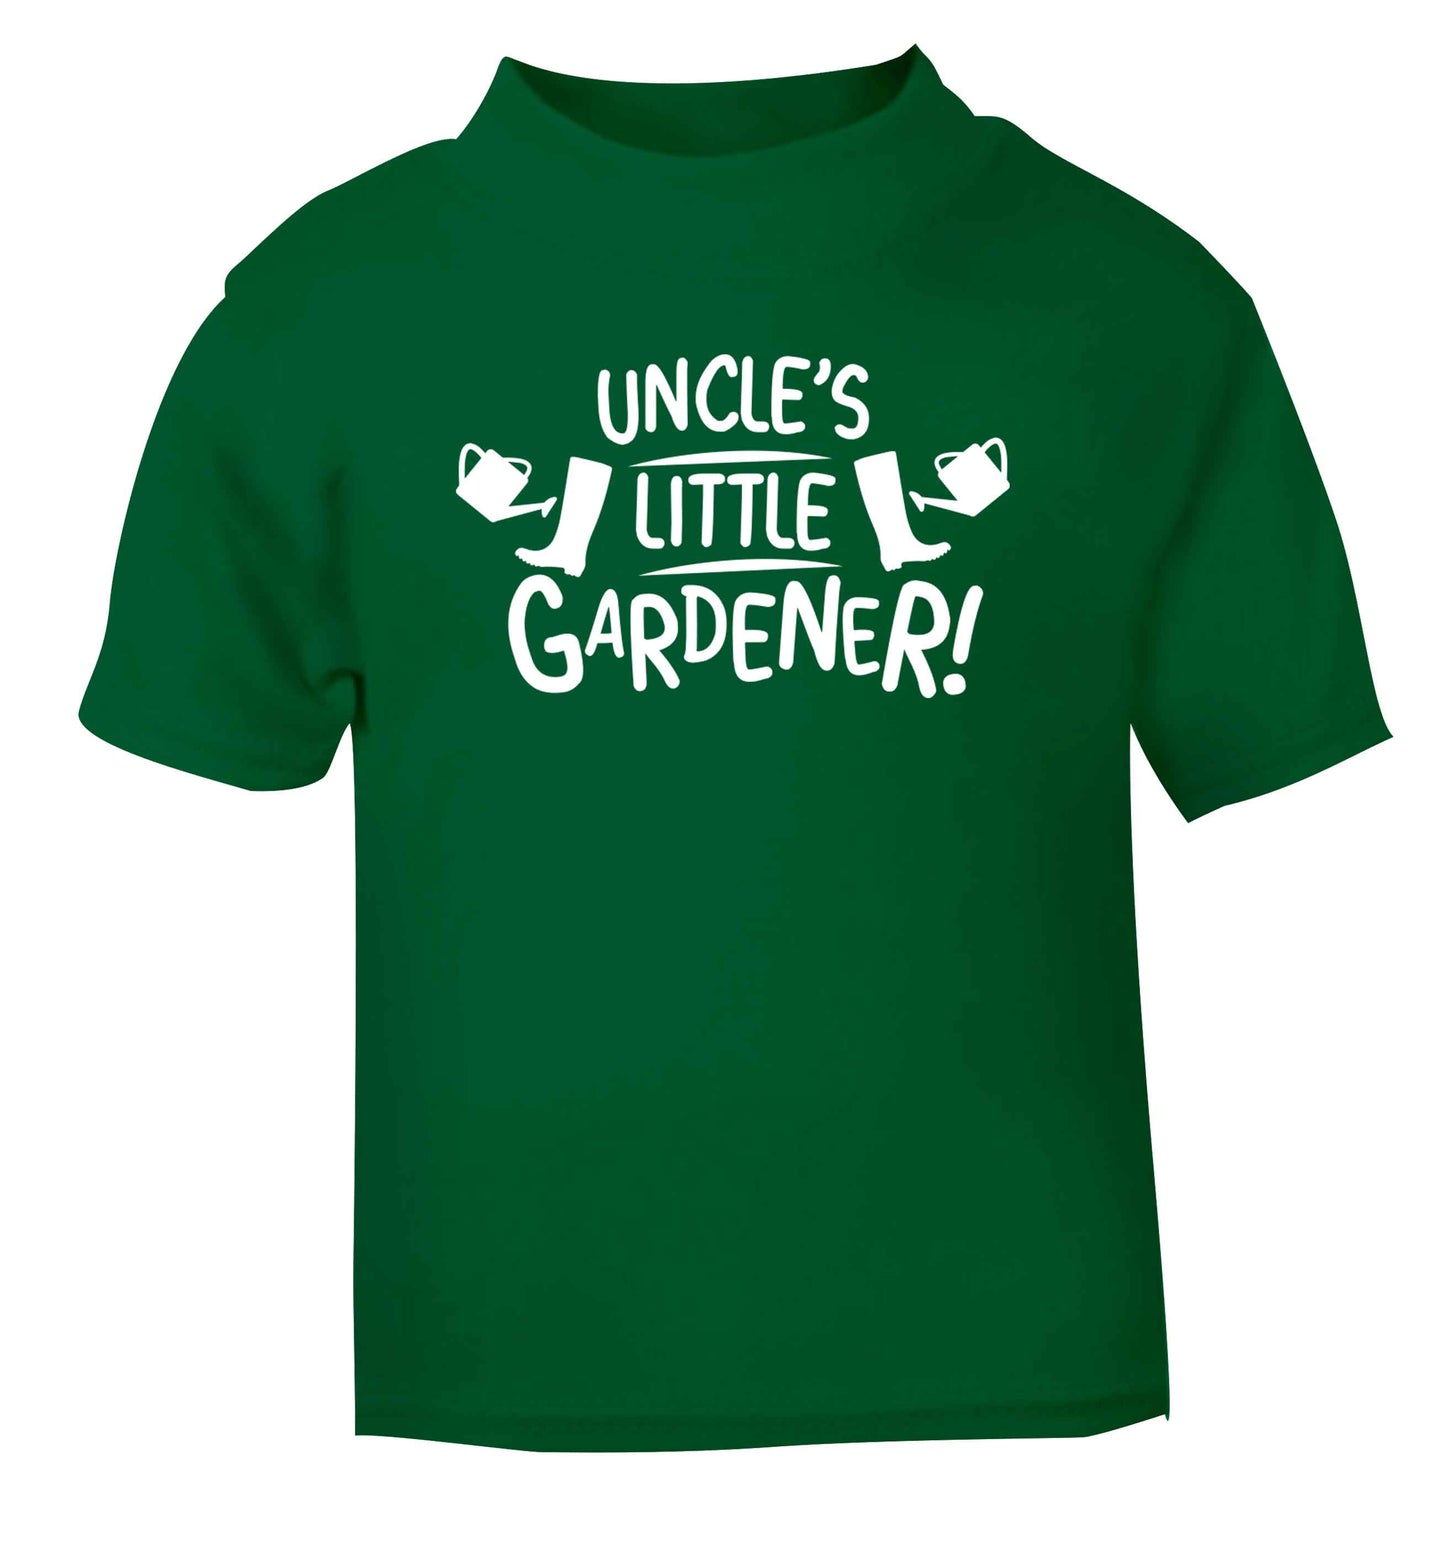 Uncle's little gardener green Baby Toddler Tshirt 2 Years